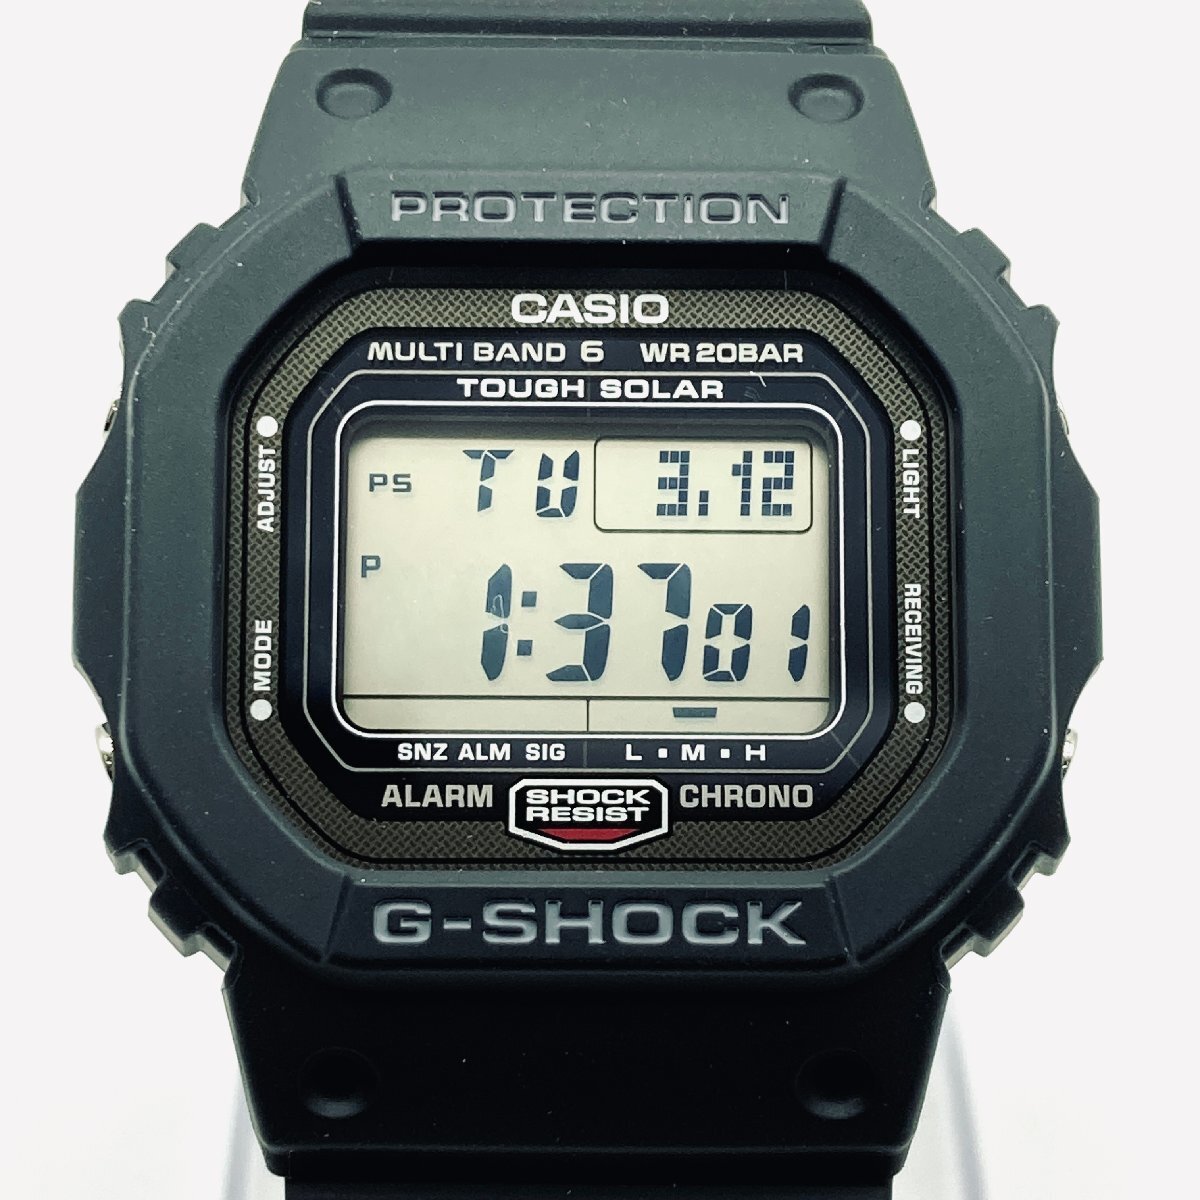 2615♭CASIO 腕時計 G-SHOCK GW-5000U-1JF 20気圧防水 電波 ソーラー 耐衝撃性 ワールドタイム 暗所で見やすい メンズ ブラック【0311】